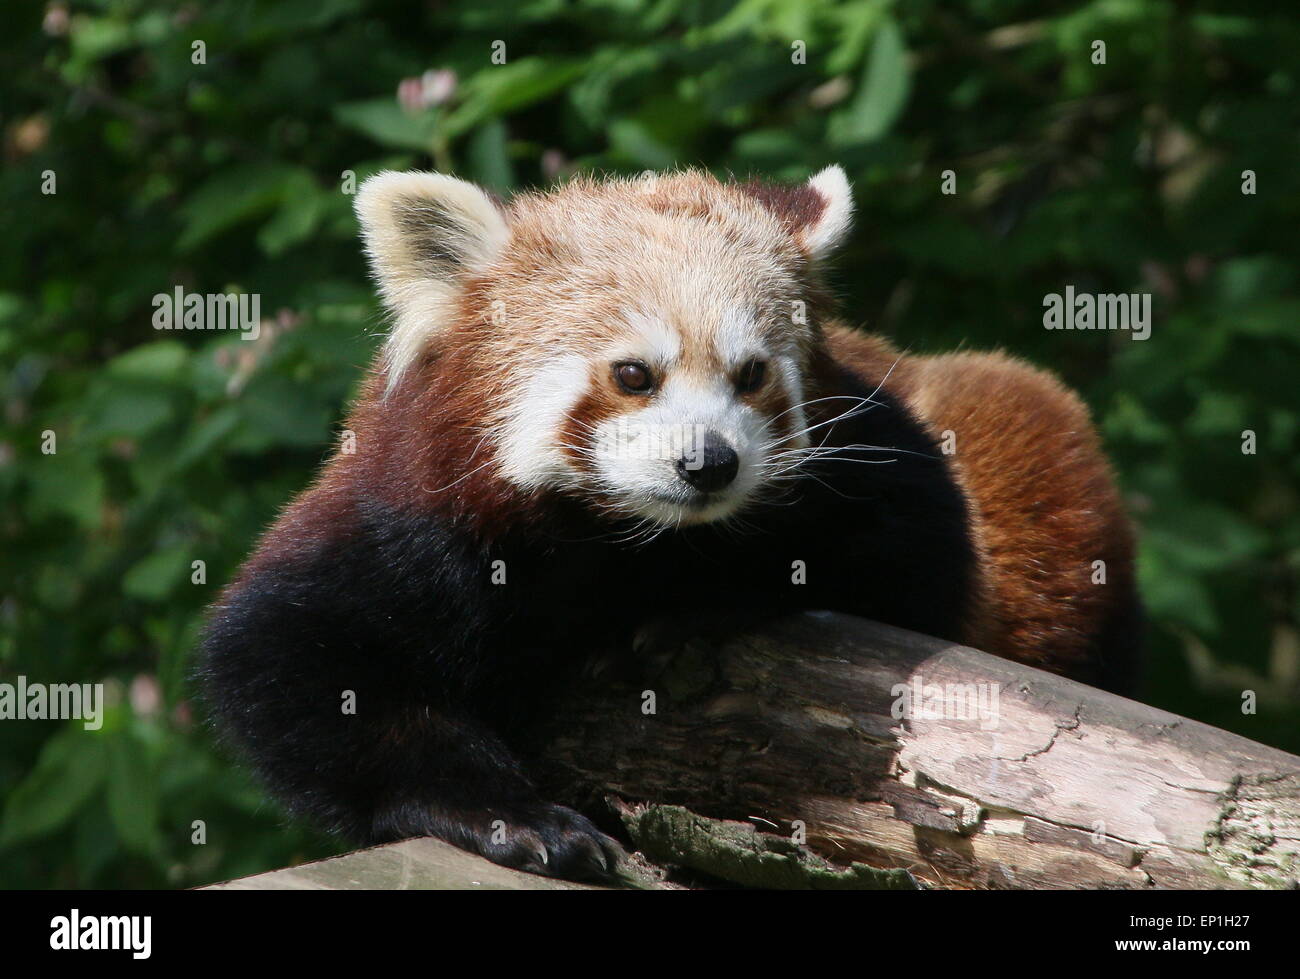 Asian Red Panda (Ailurus fulgens) at Ouwehands Zoo, Rhenen, The Netherlands Stock Photo